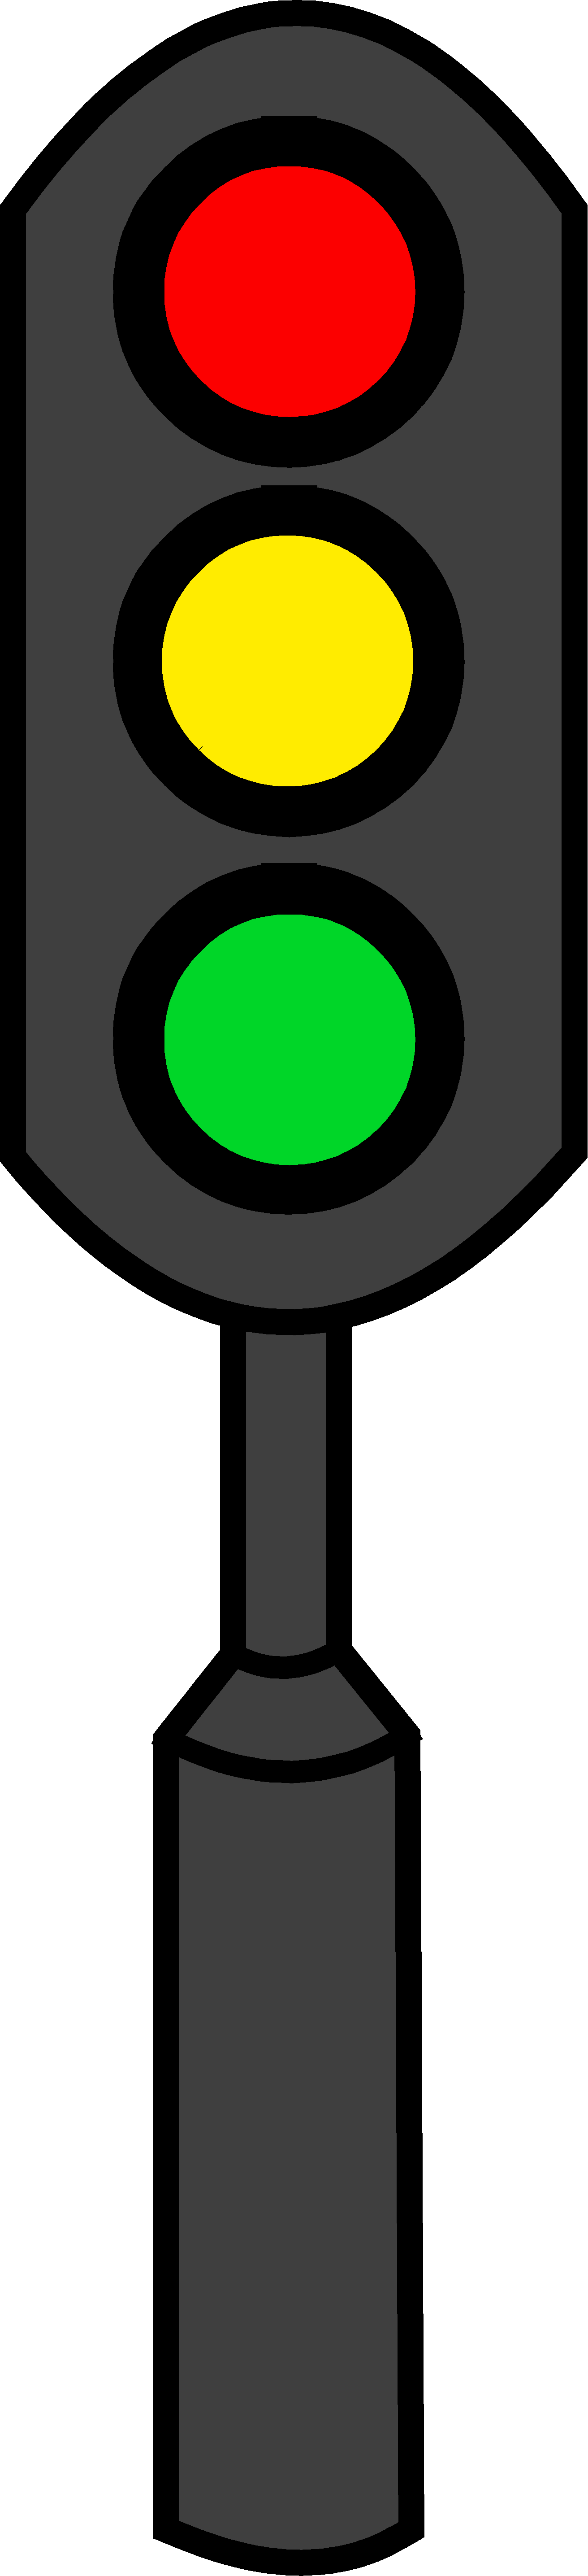 Image Of Traffic Light